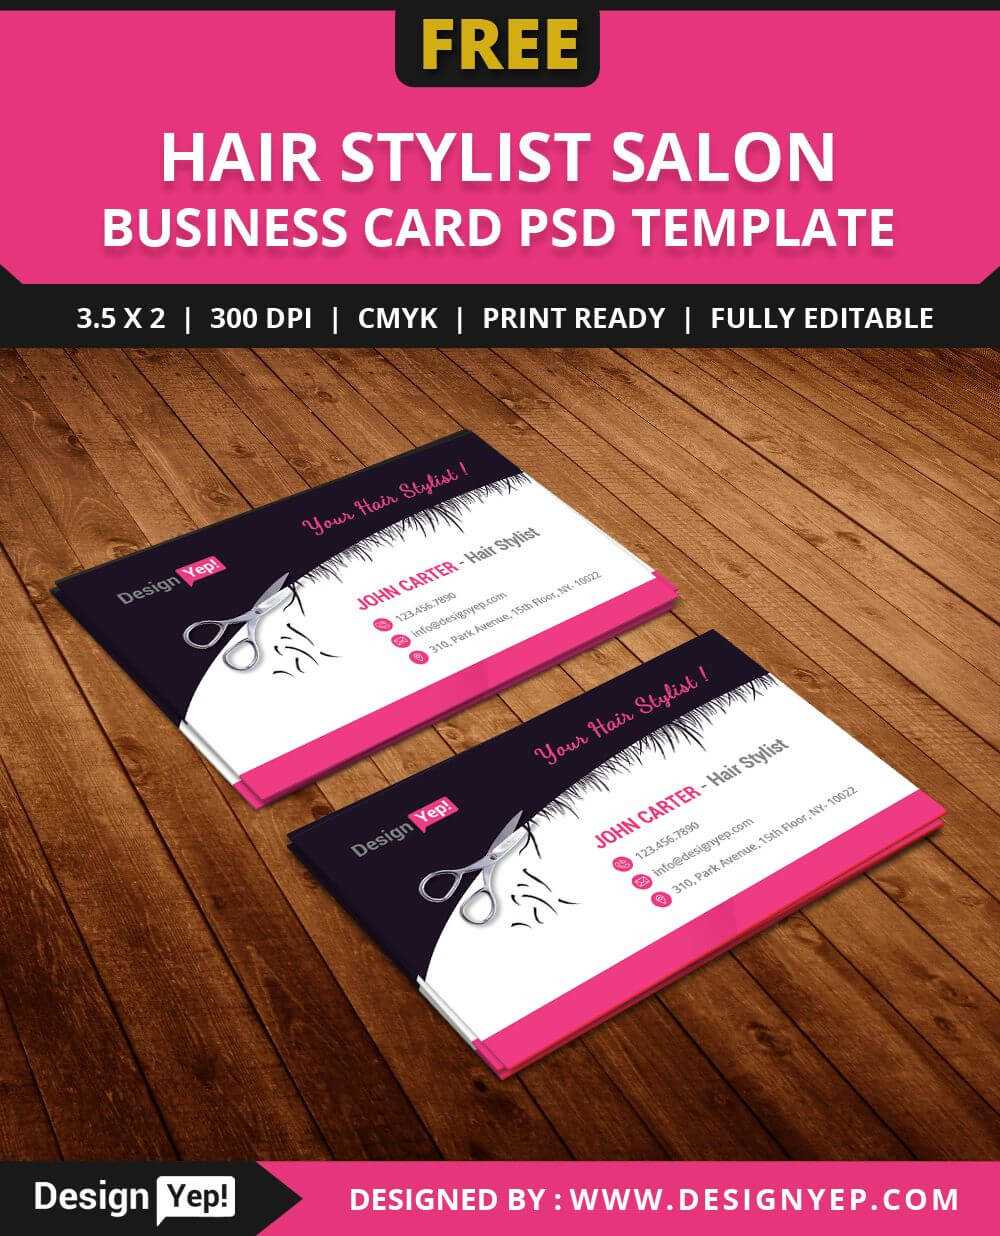 Free Hair Stylist Salon Business Card Template Psd | Free Pertaining To Hair Salon Business Card Template